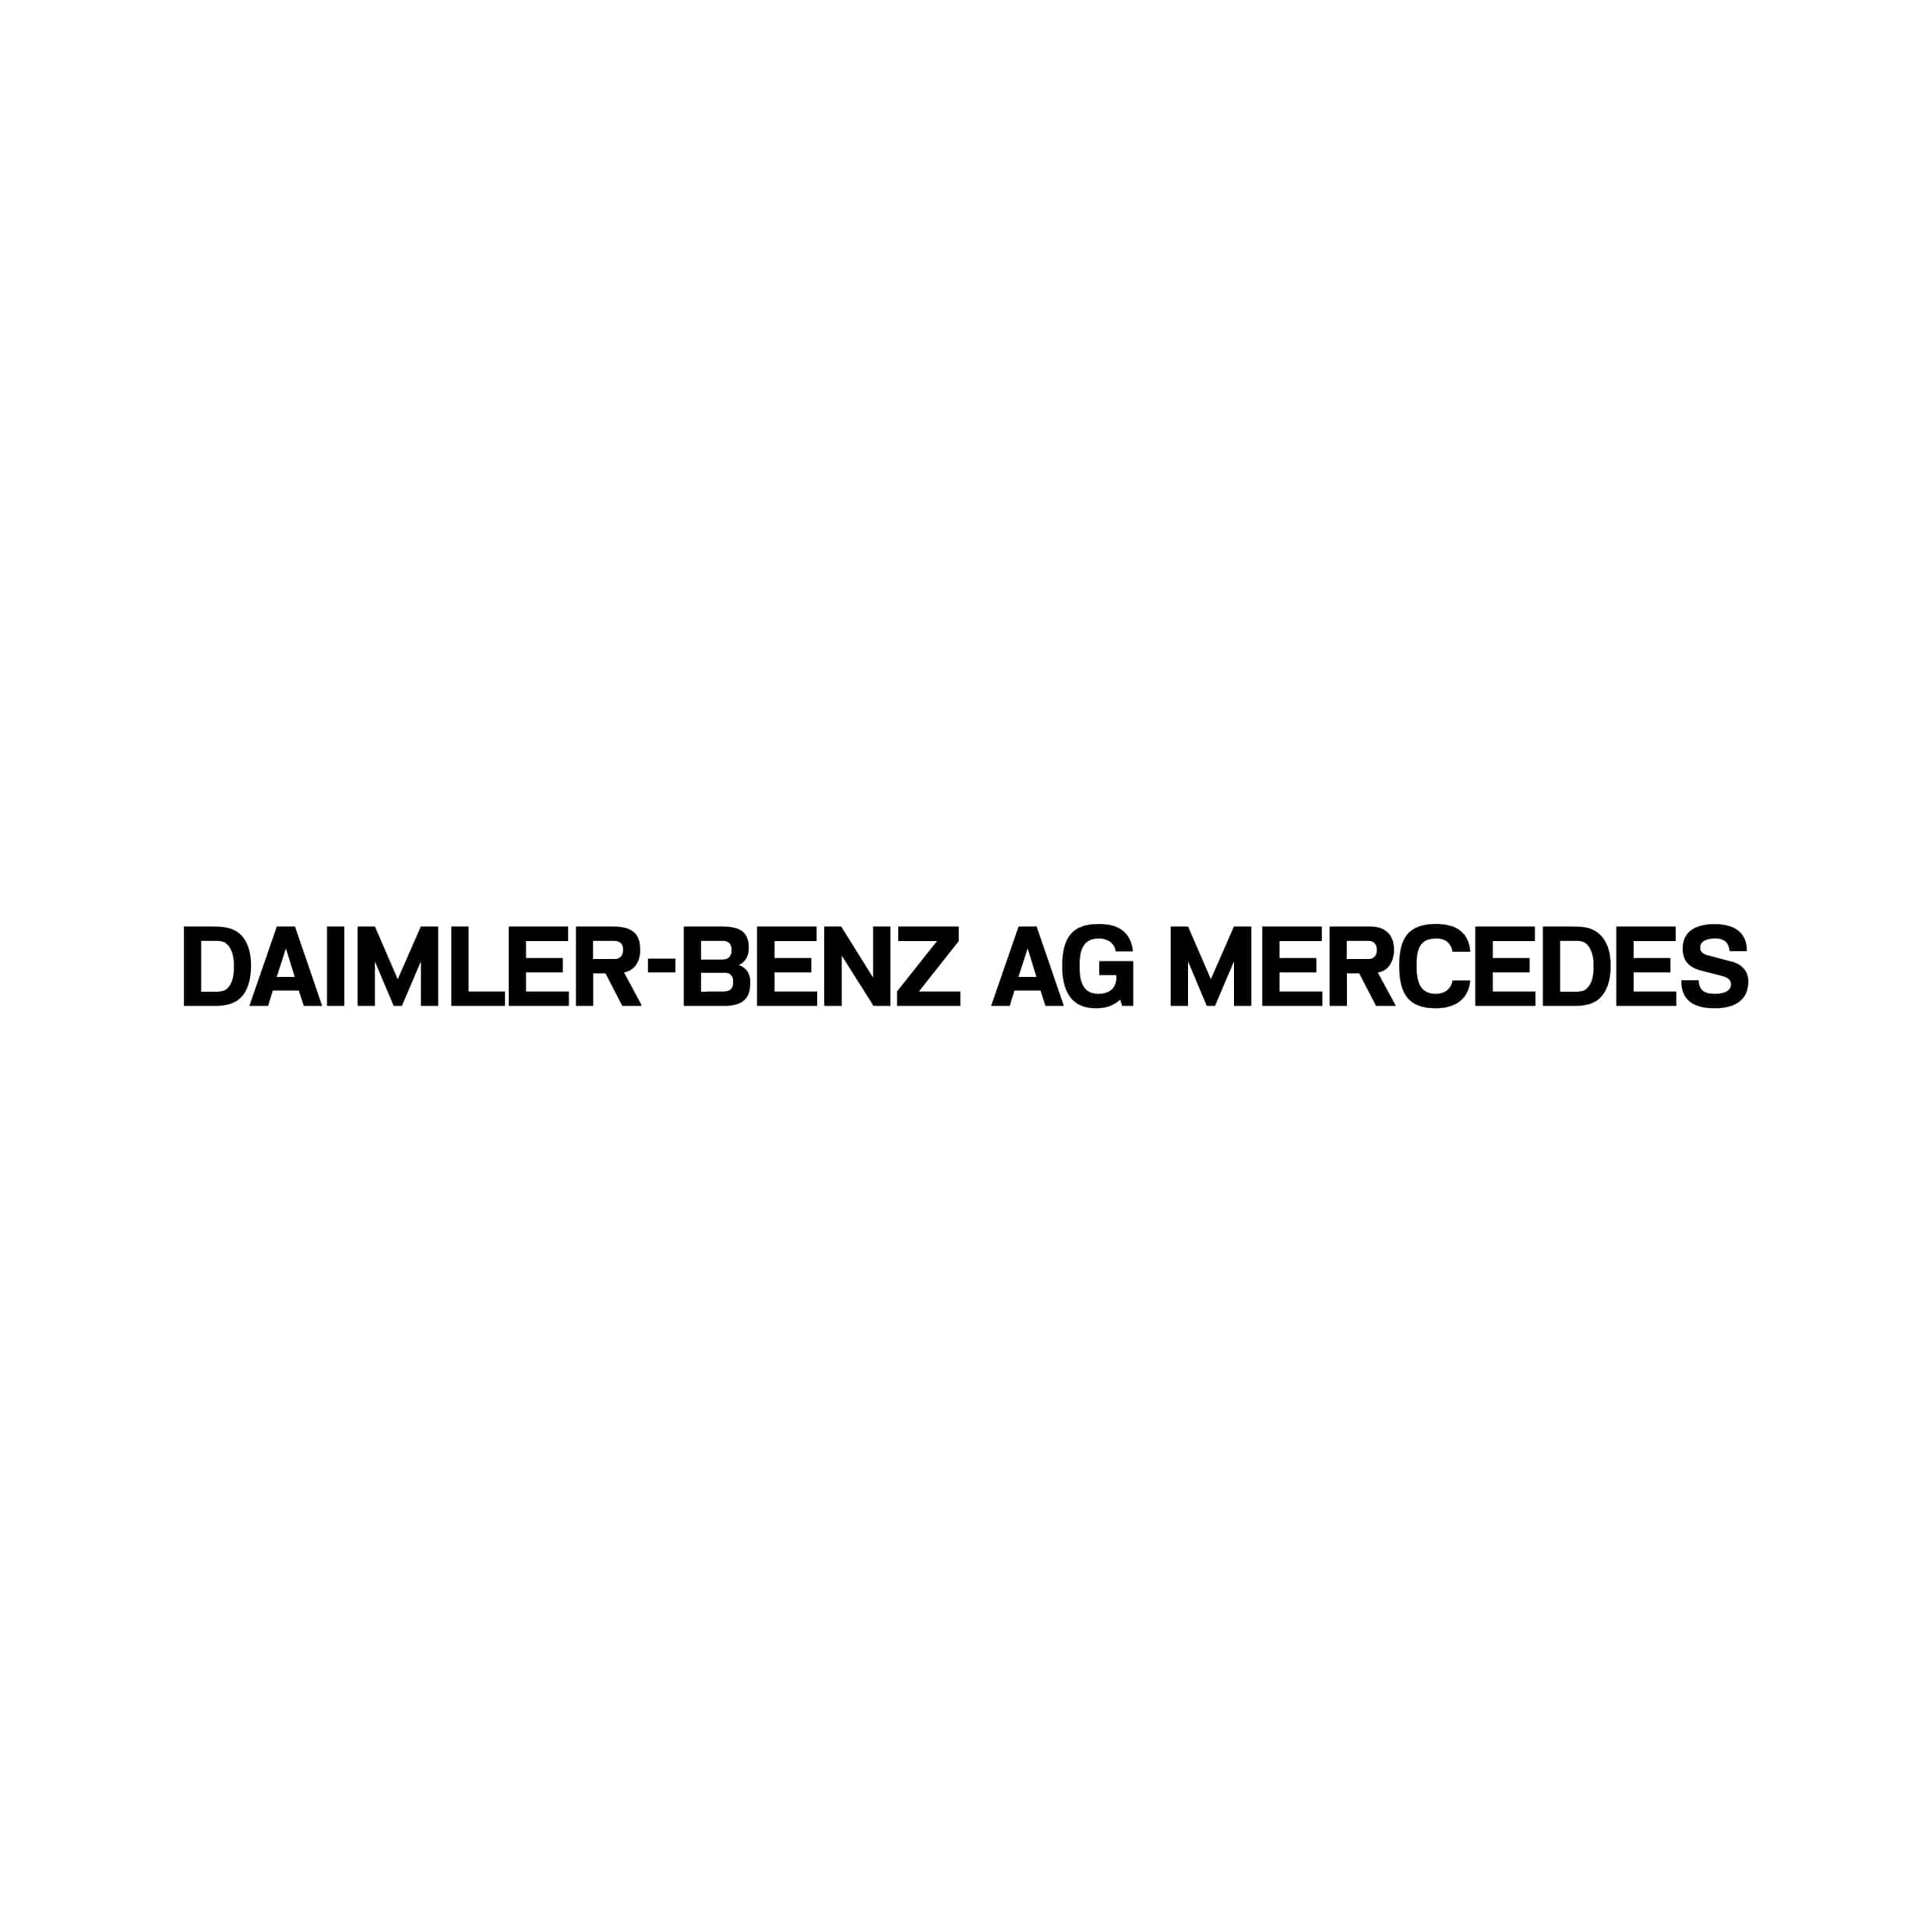 STICKERS MERCEDES DAIMLER-BENZ AG